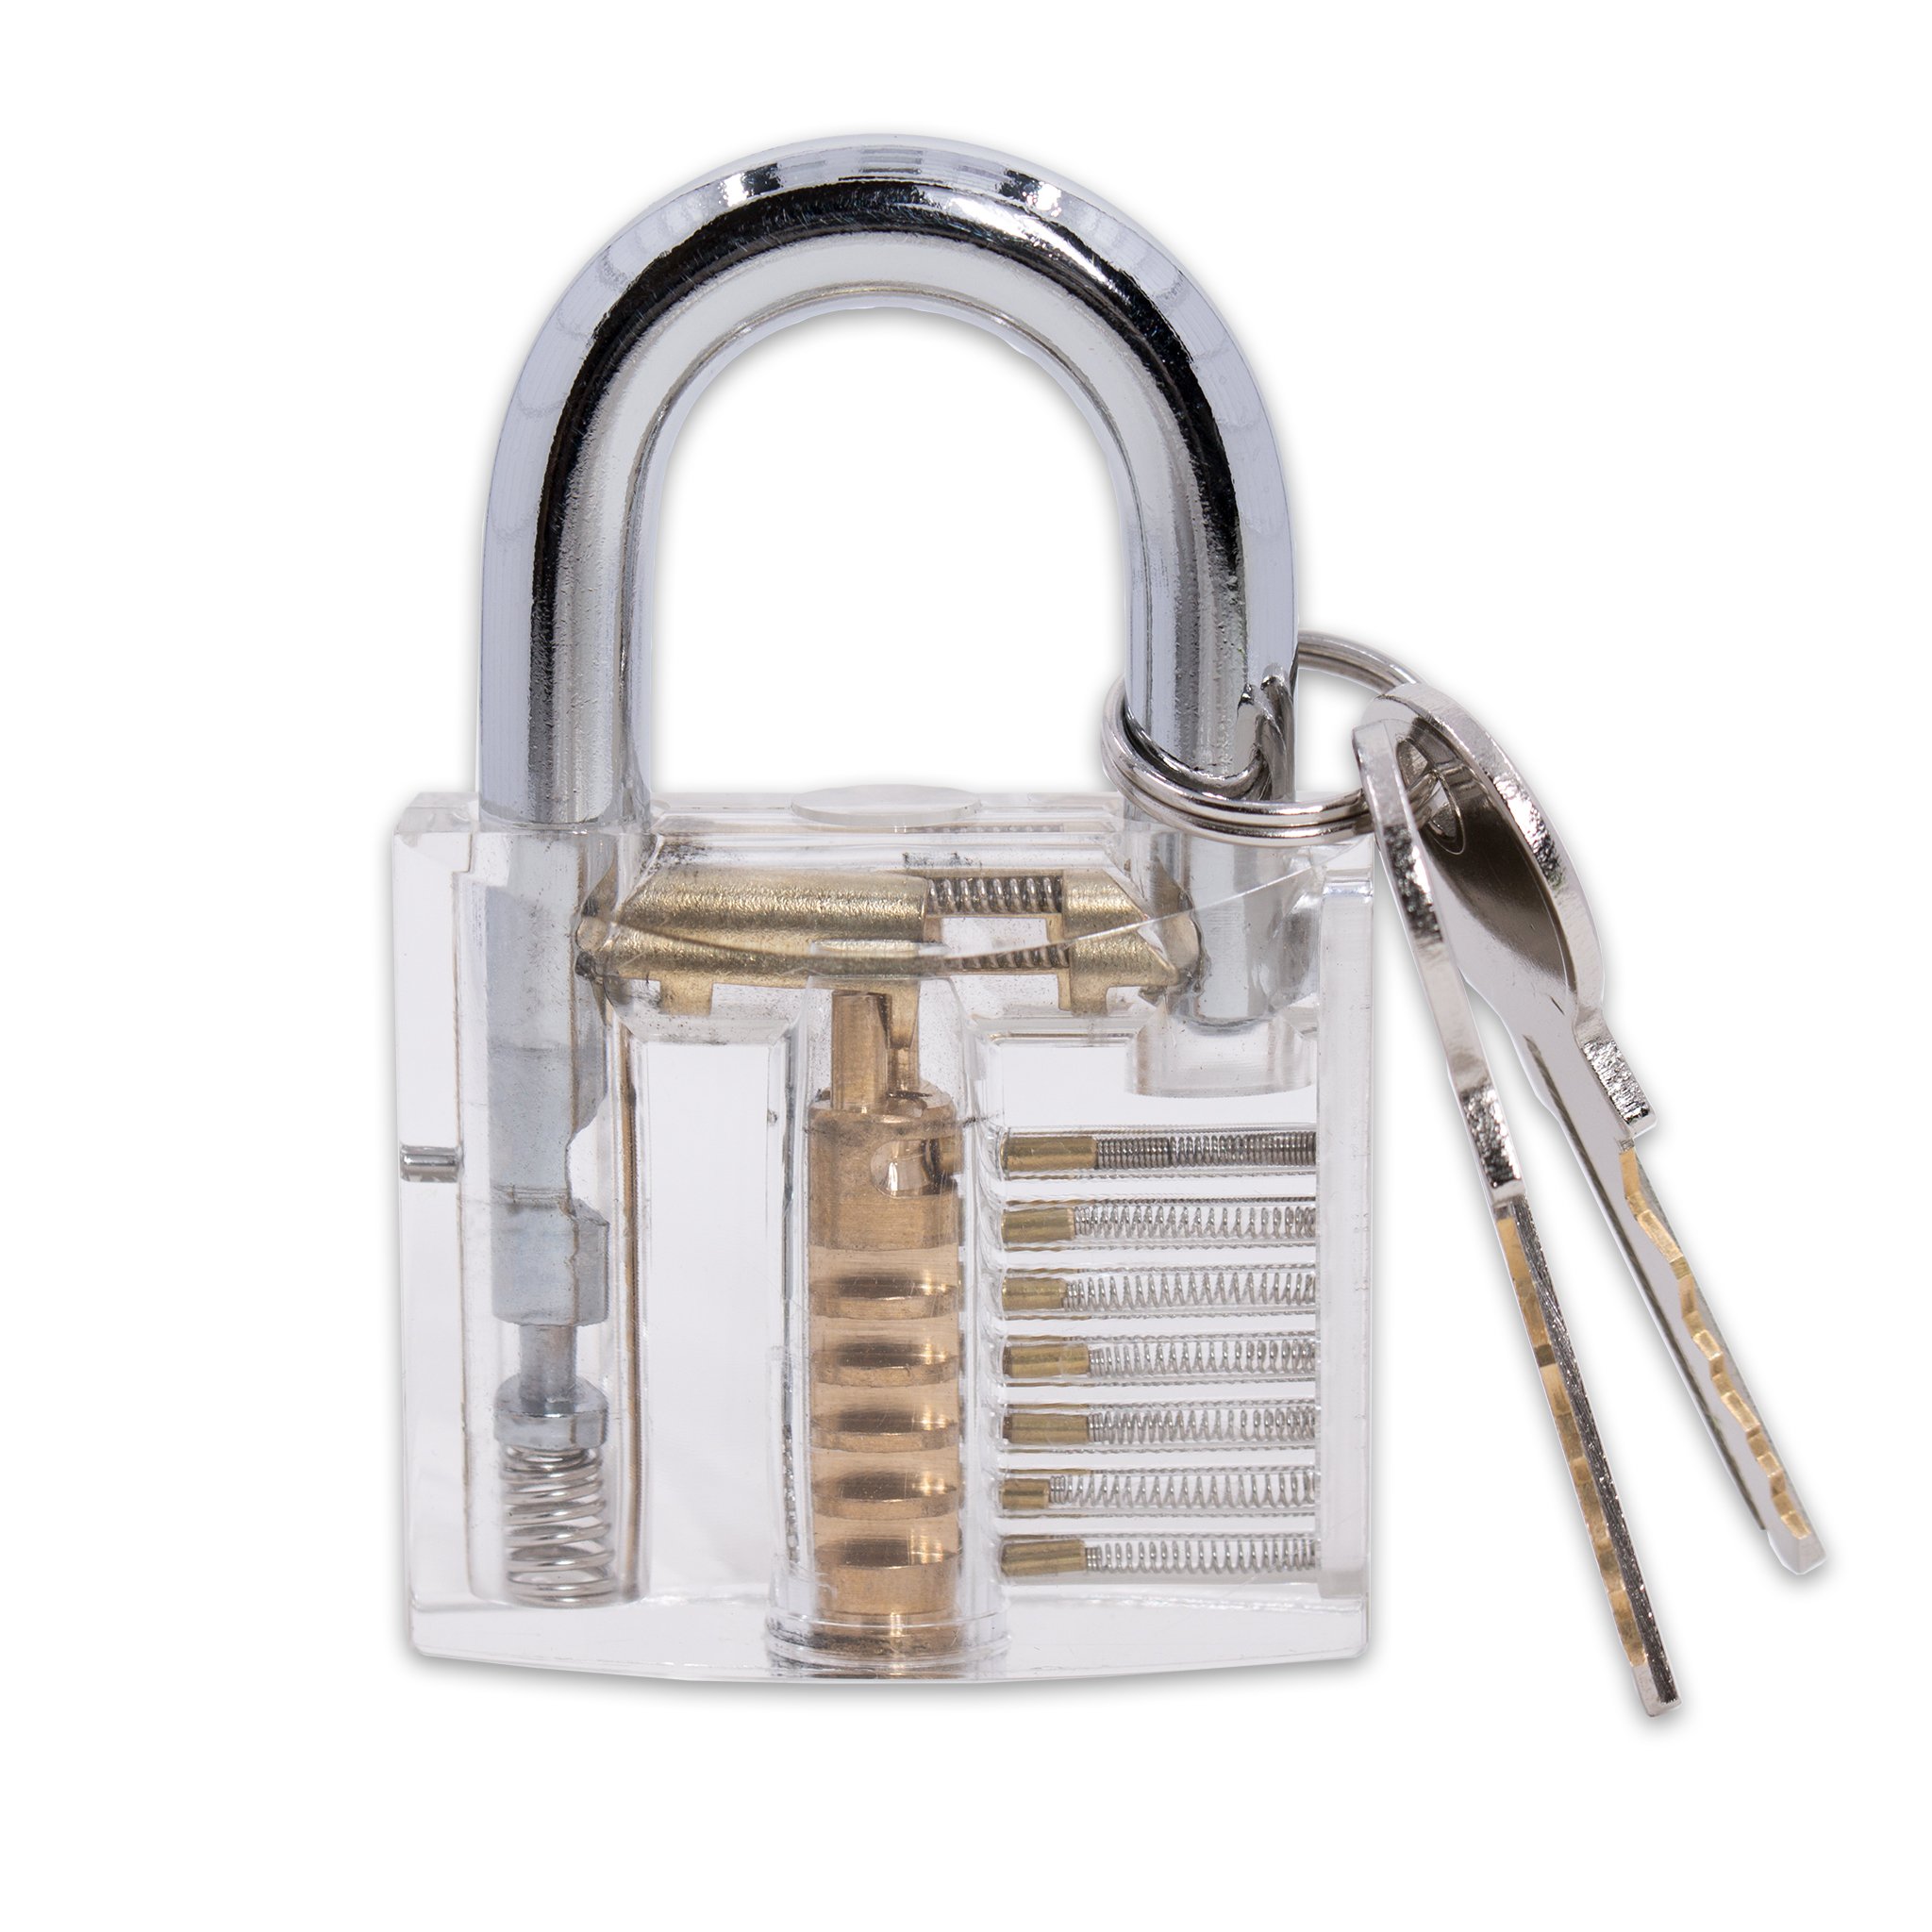 Acrylic Training Lock – Readyman